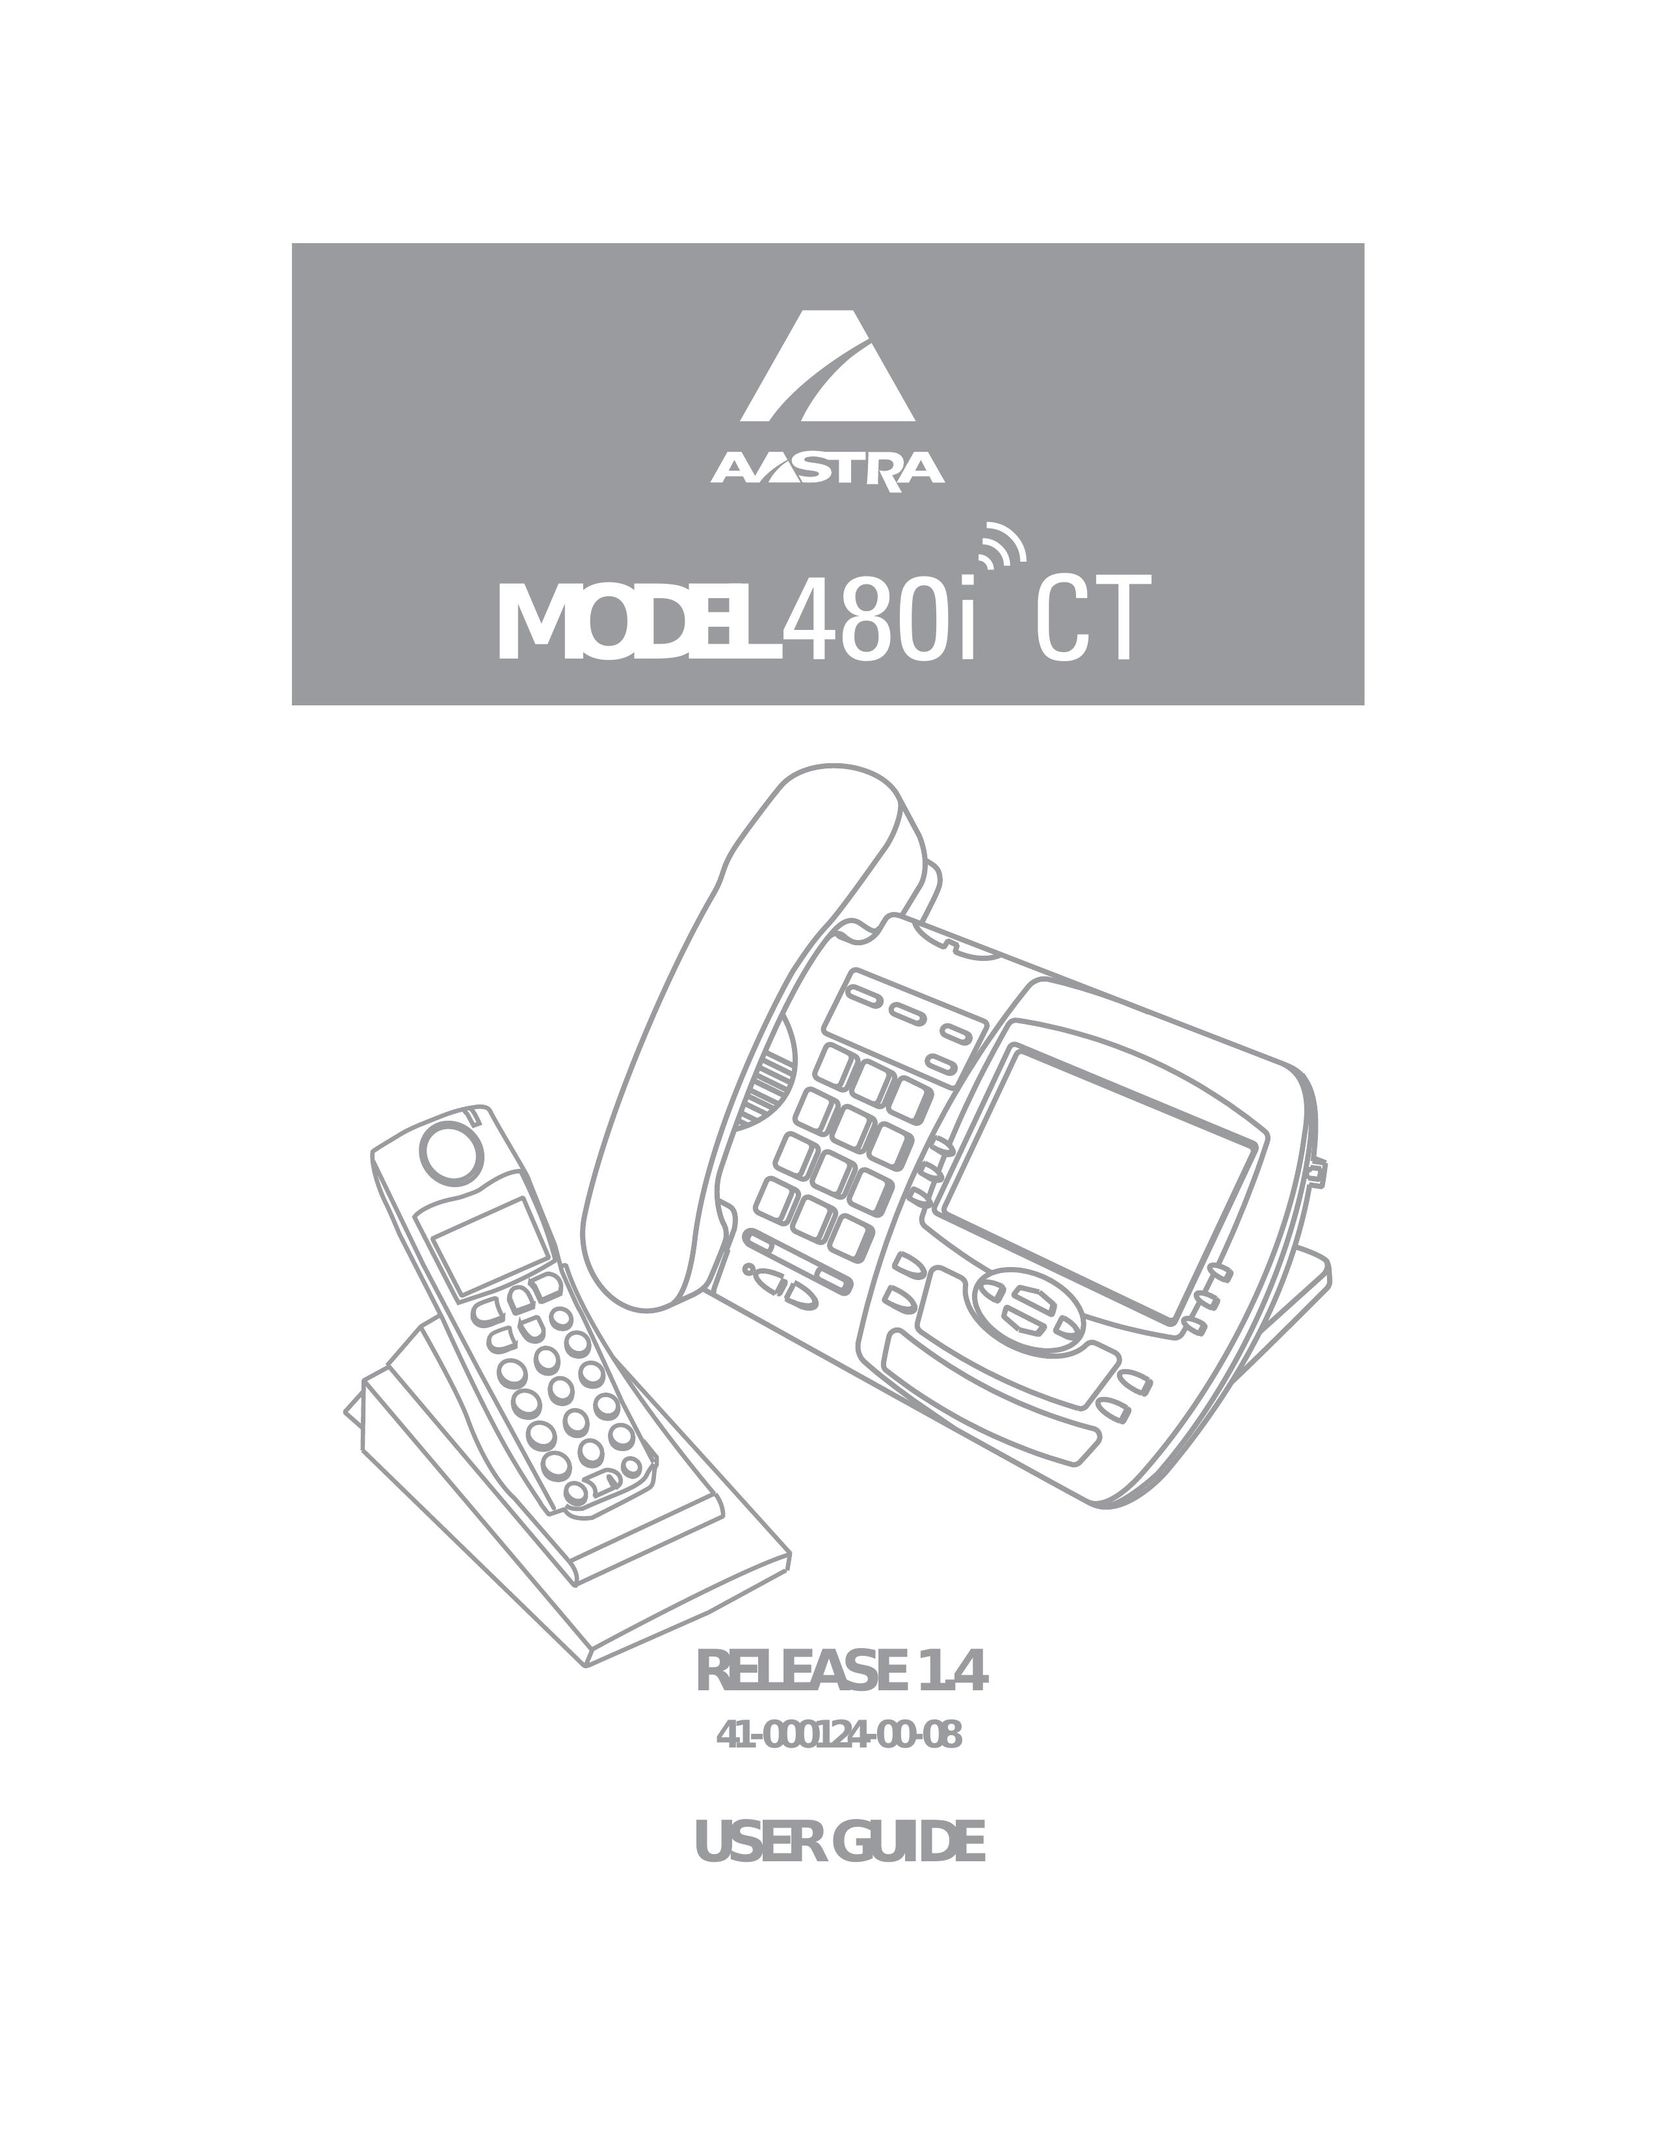 Aastra Telecom 480i CT Telephone User Manual